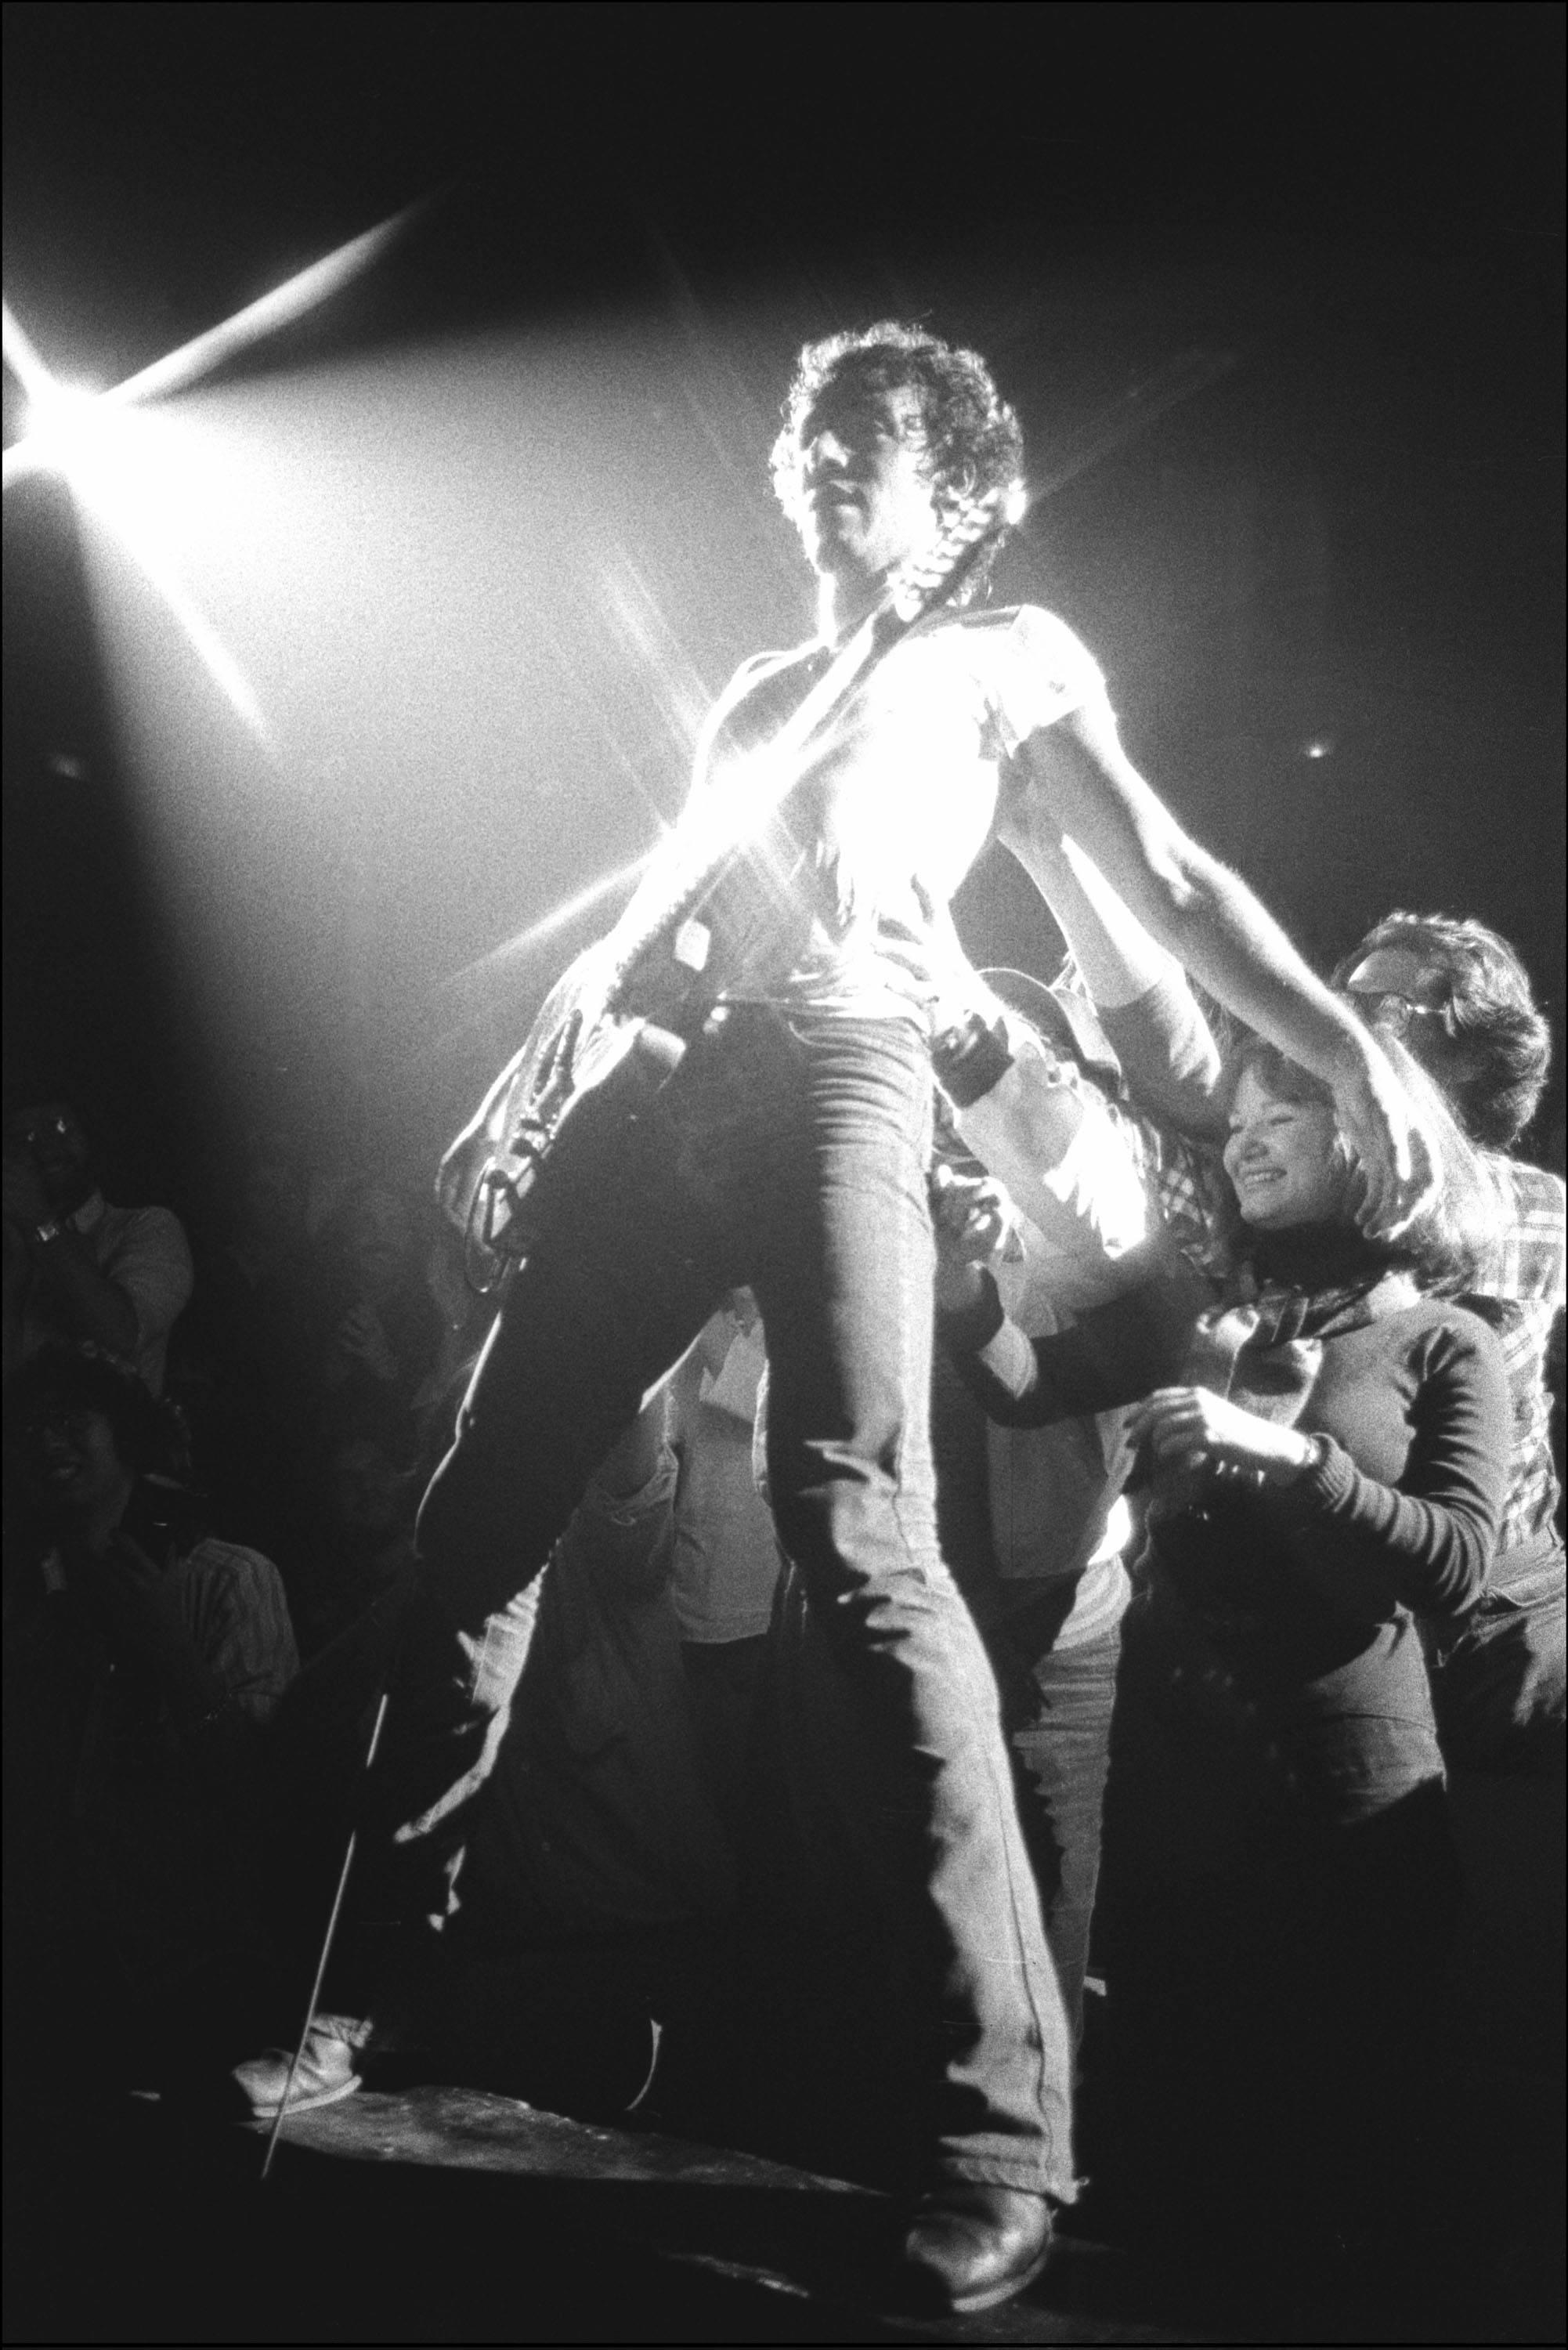 Bruce Springsteen at the Palladium, 1976